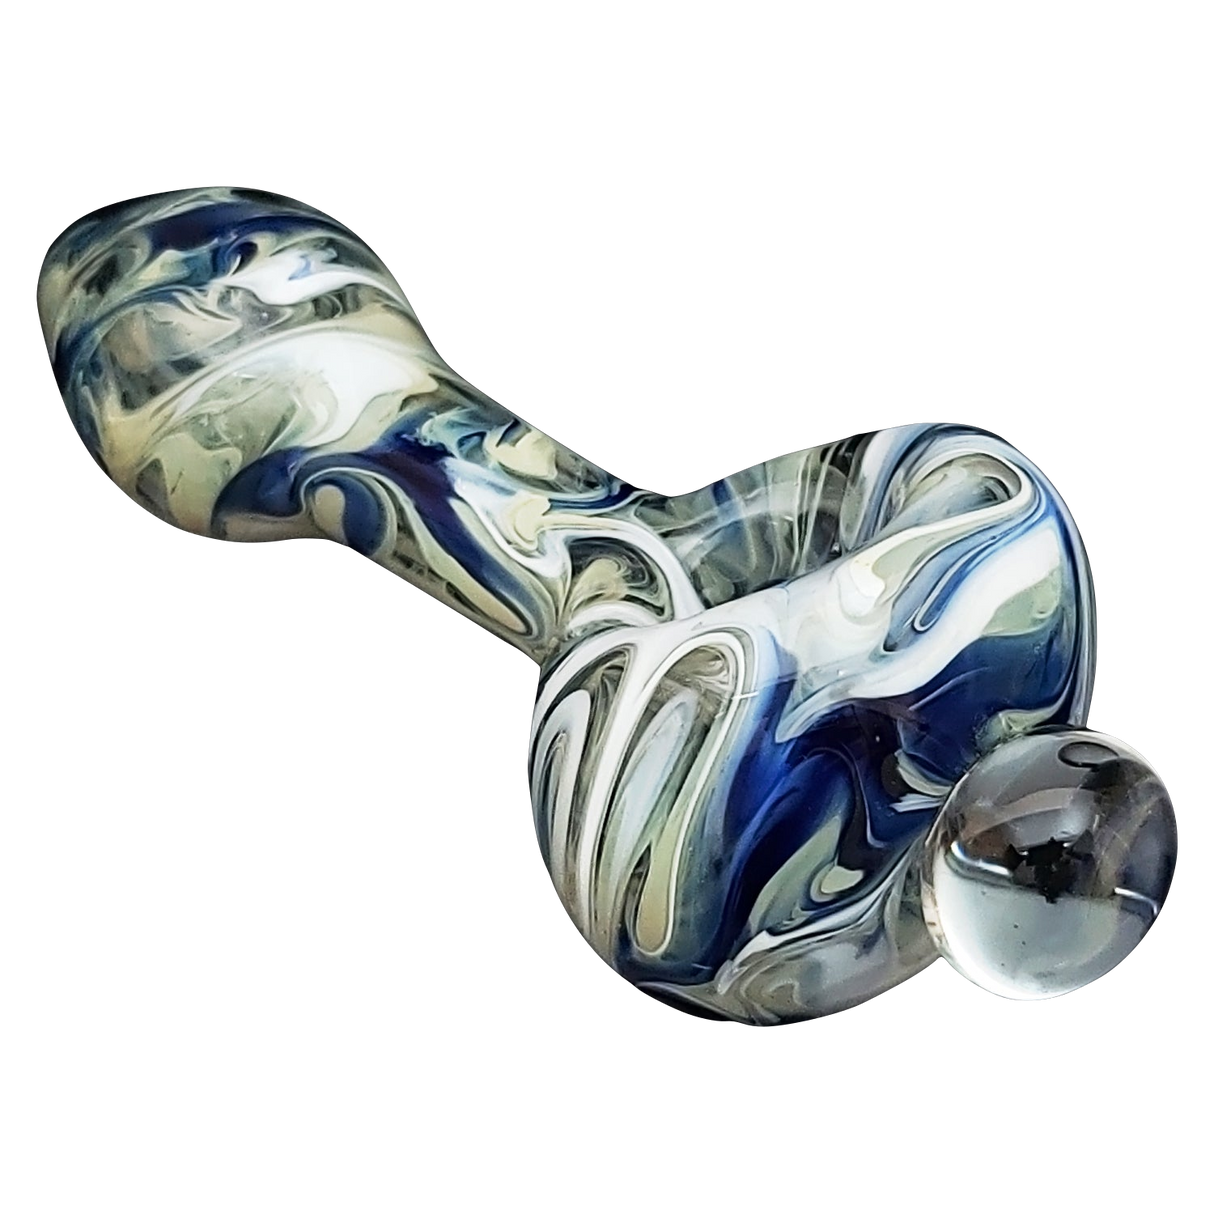 LA Pipes HP2 Spoon Hand Pipe in Borosilicate Glass with Swirl Design, Top View